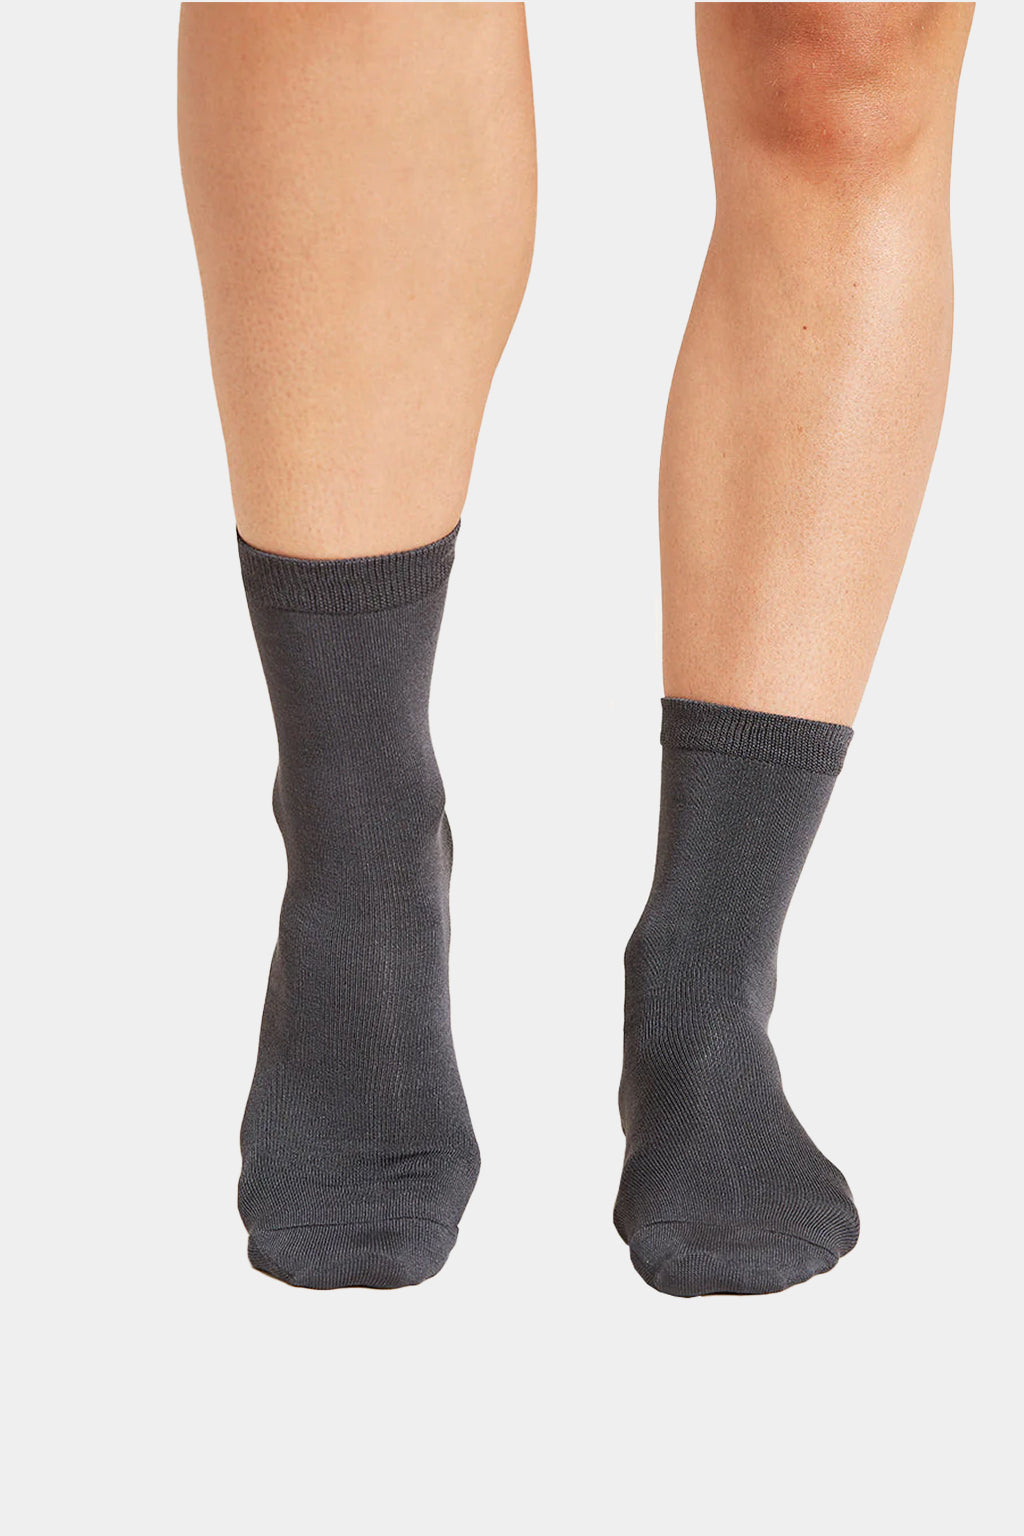 Boody - Women's Everyday Ankle Socks (Pairs of Three)